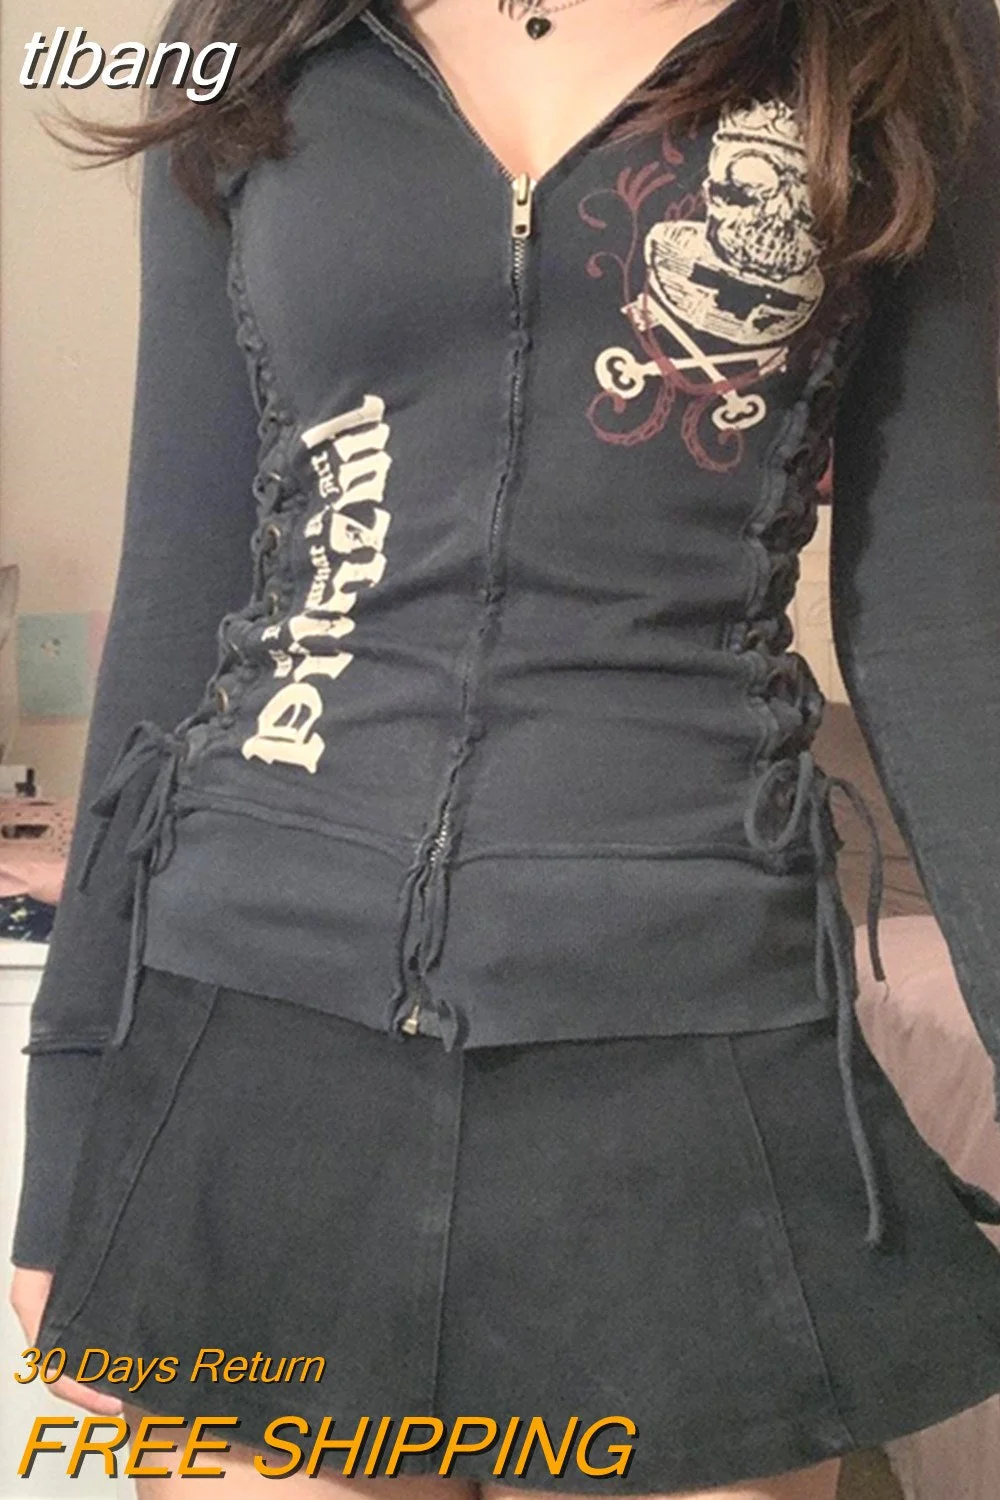 tlbang y2k Grunge 2000s Sweatshirt Punk Gothic Women Zip Up Long Sleeve Tops E Girl Hoodie Dark Academia Aesthetic Clothes